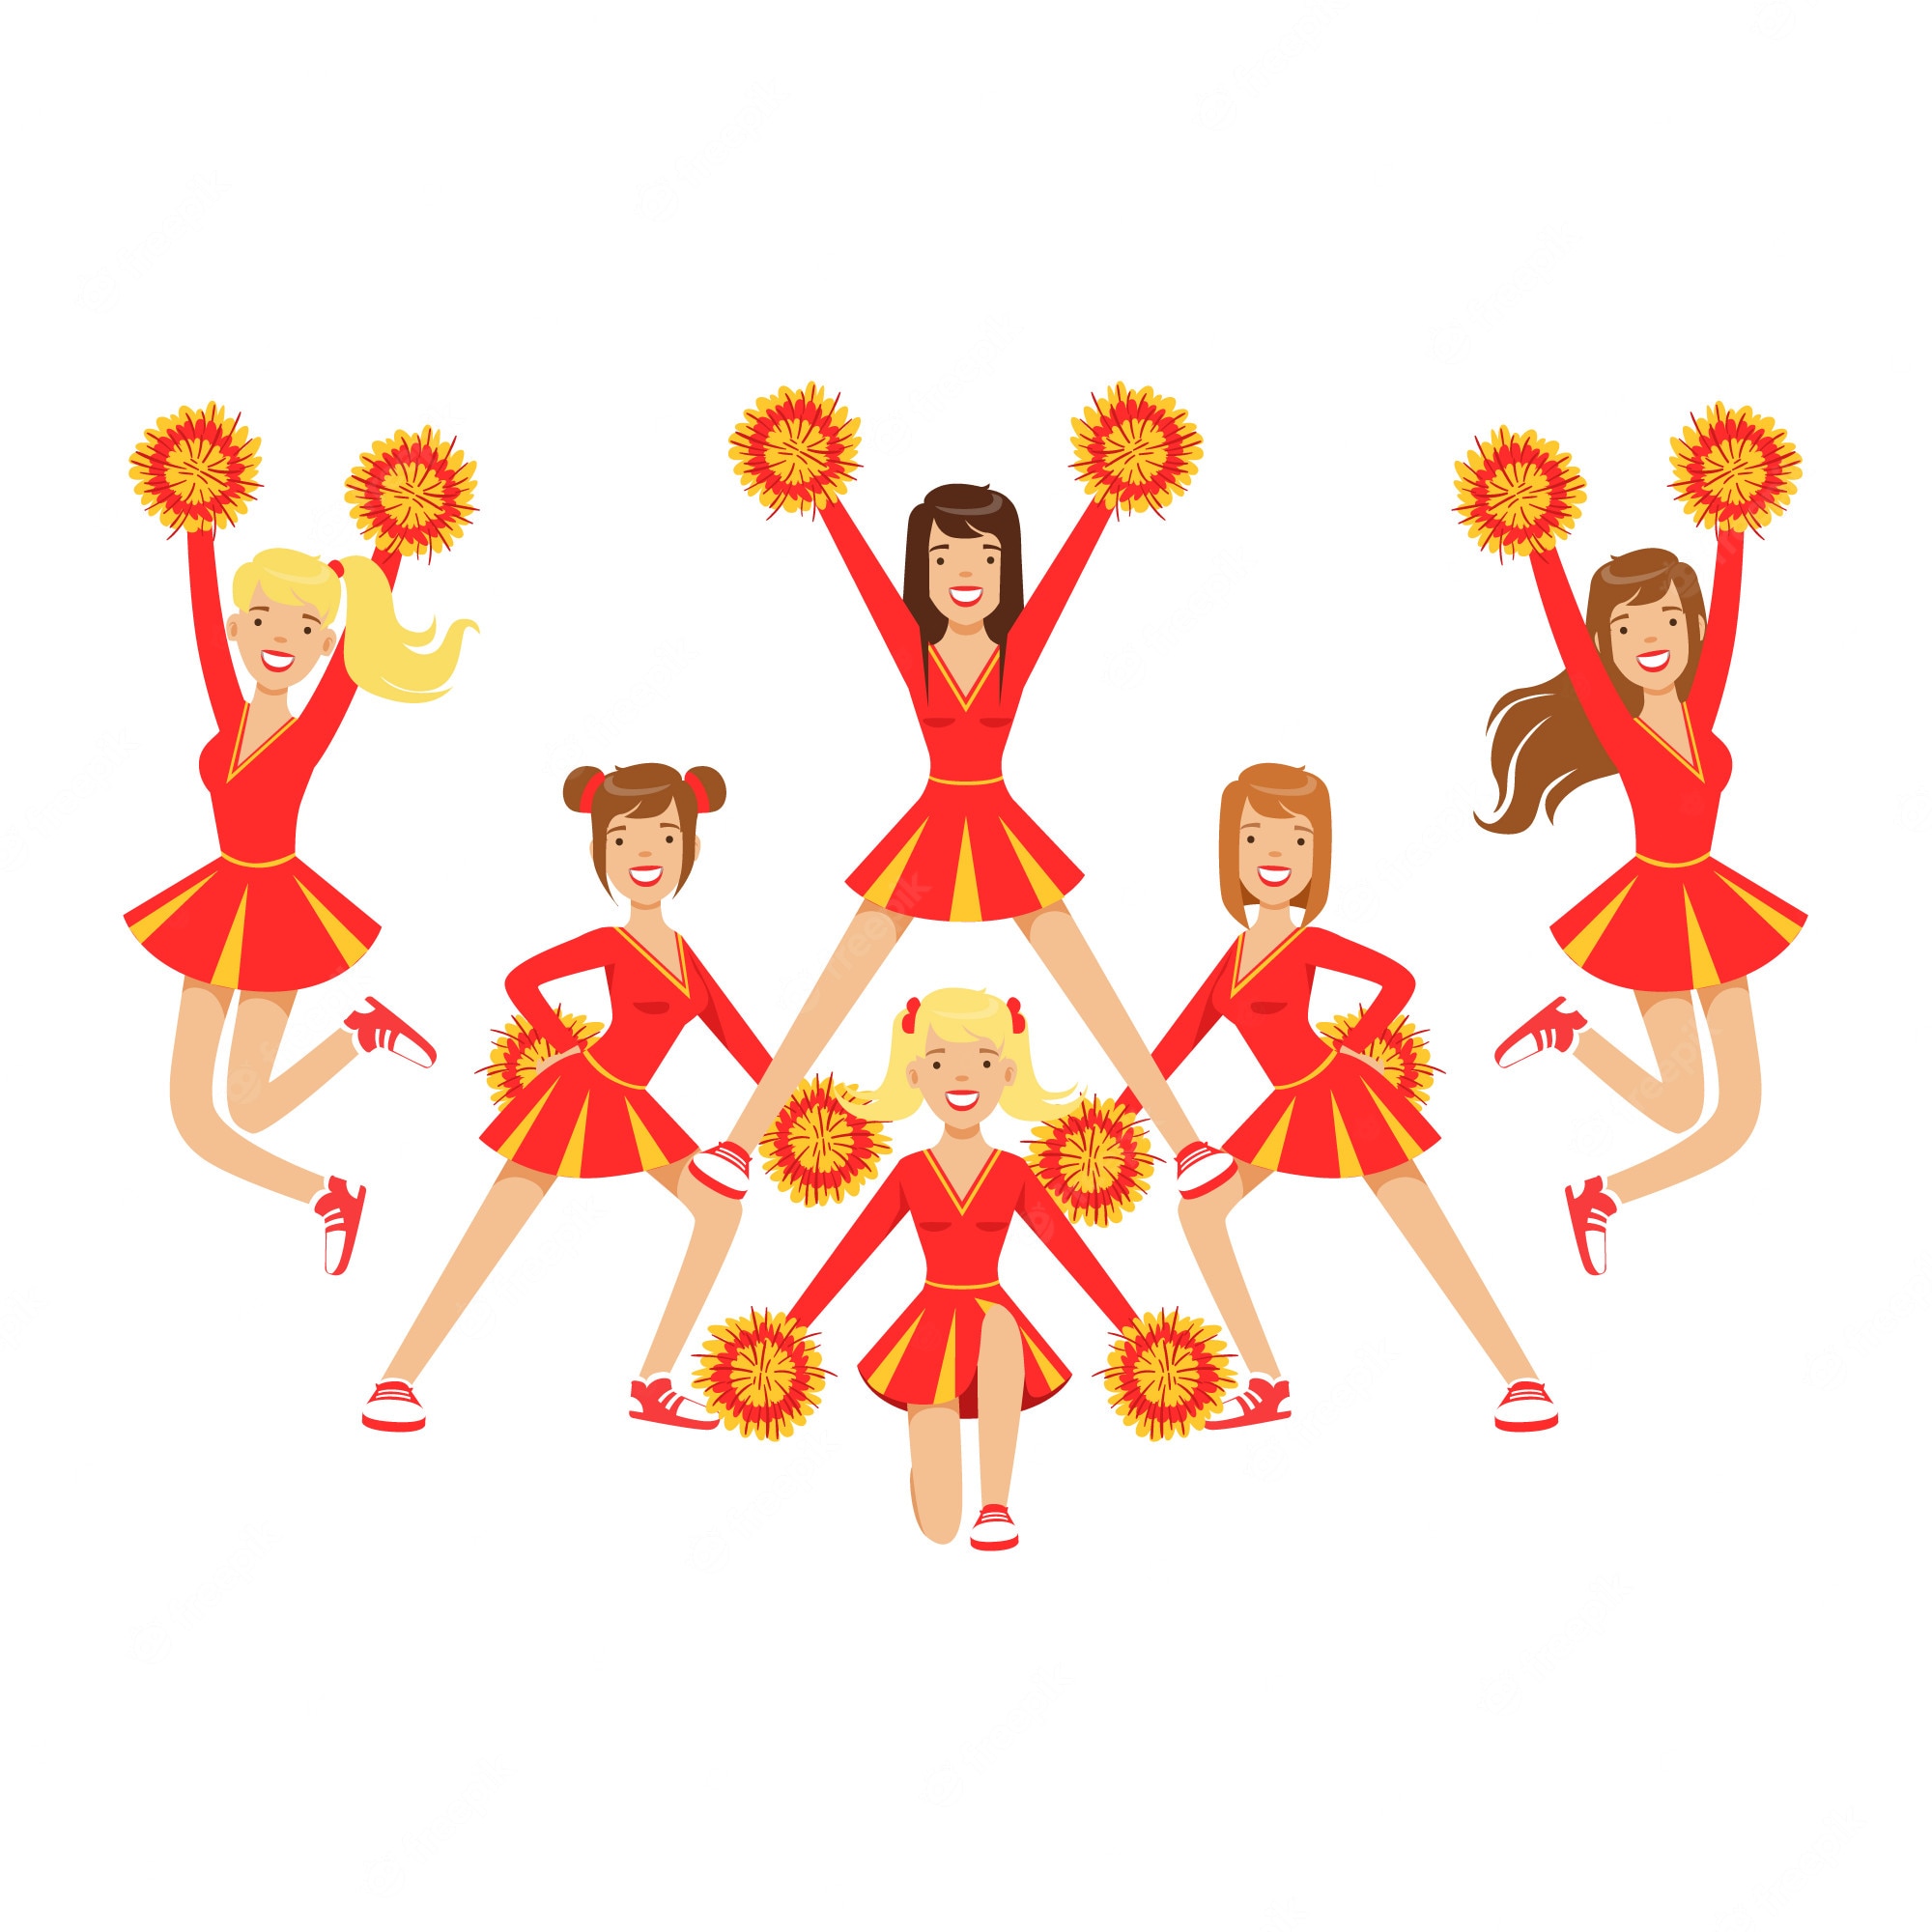 290 Funny Cheerleader Illustrations Royalty Free Vector Graphics